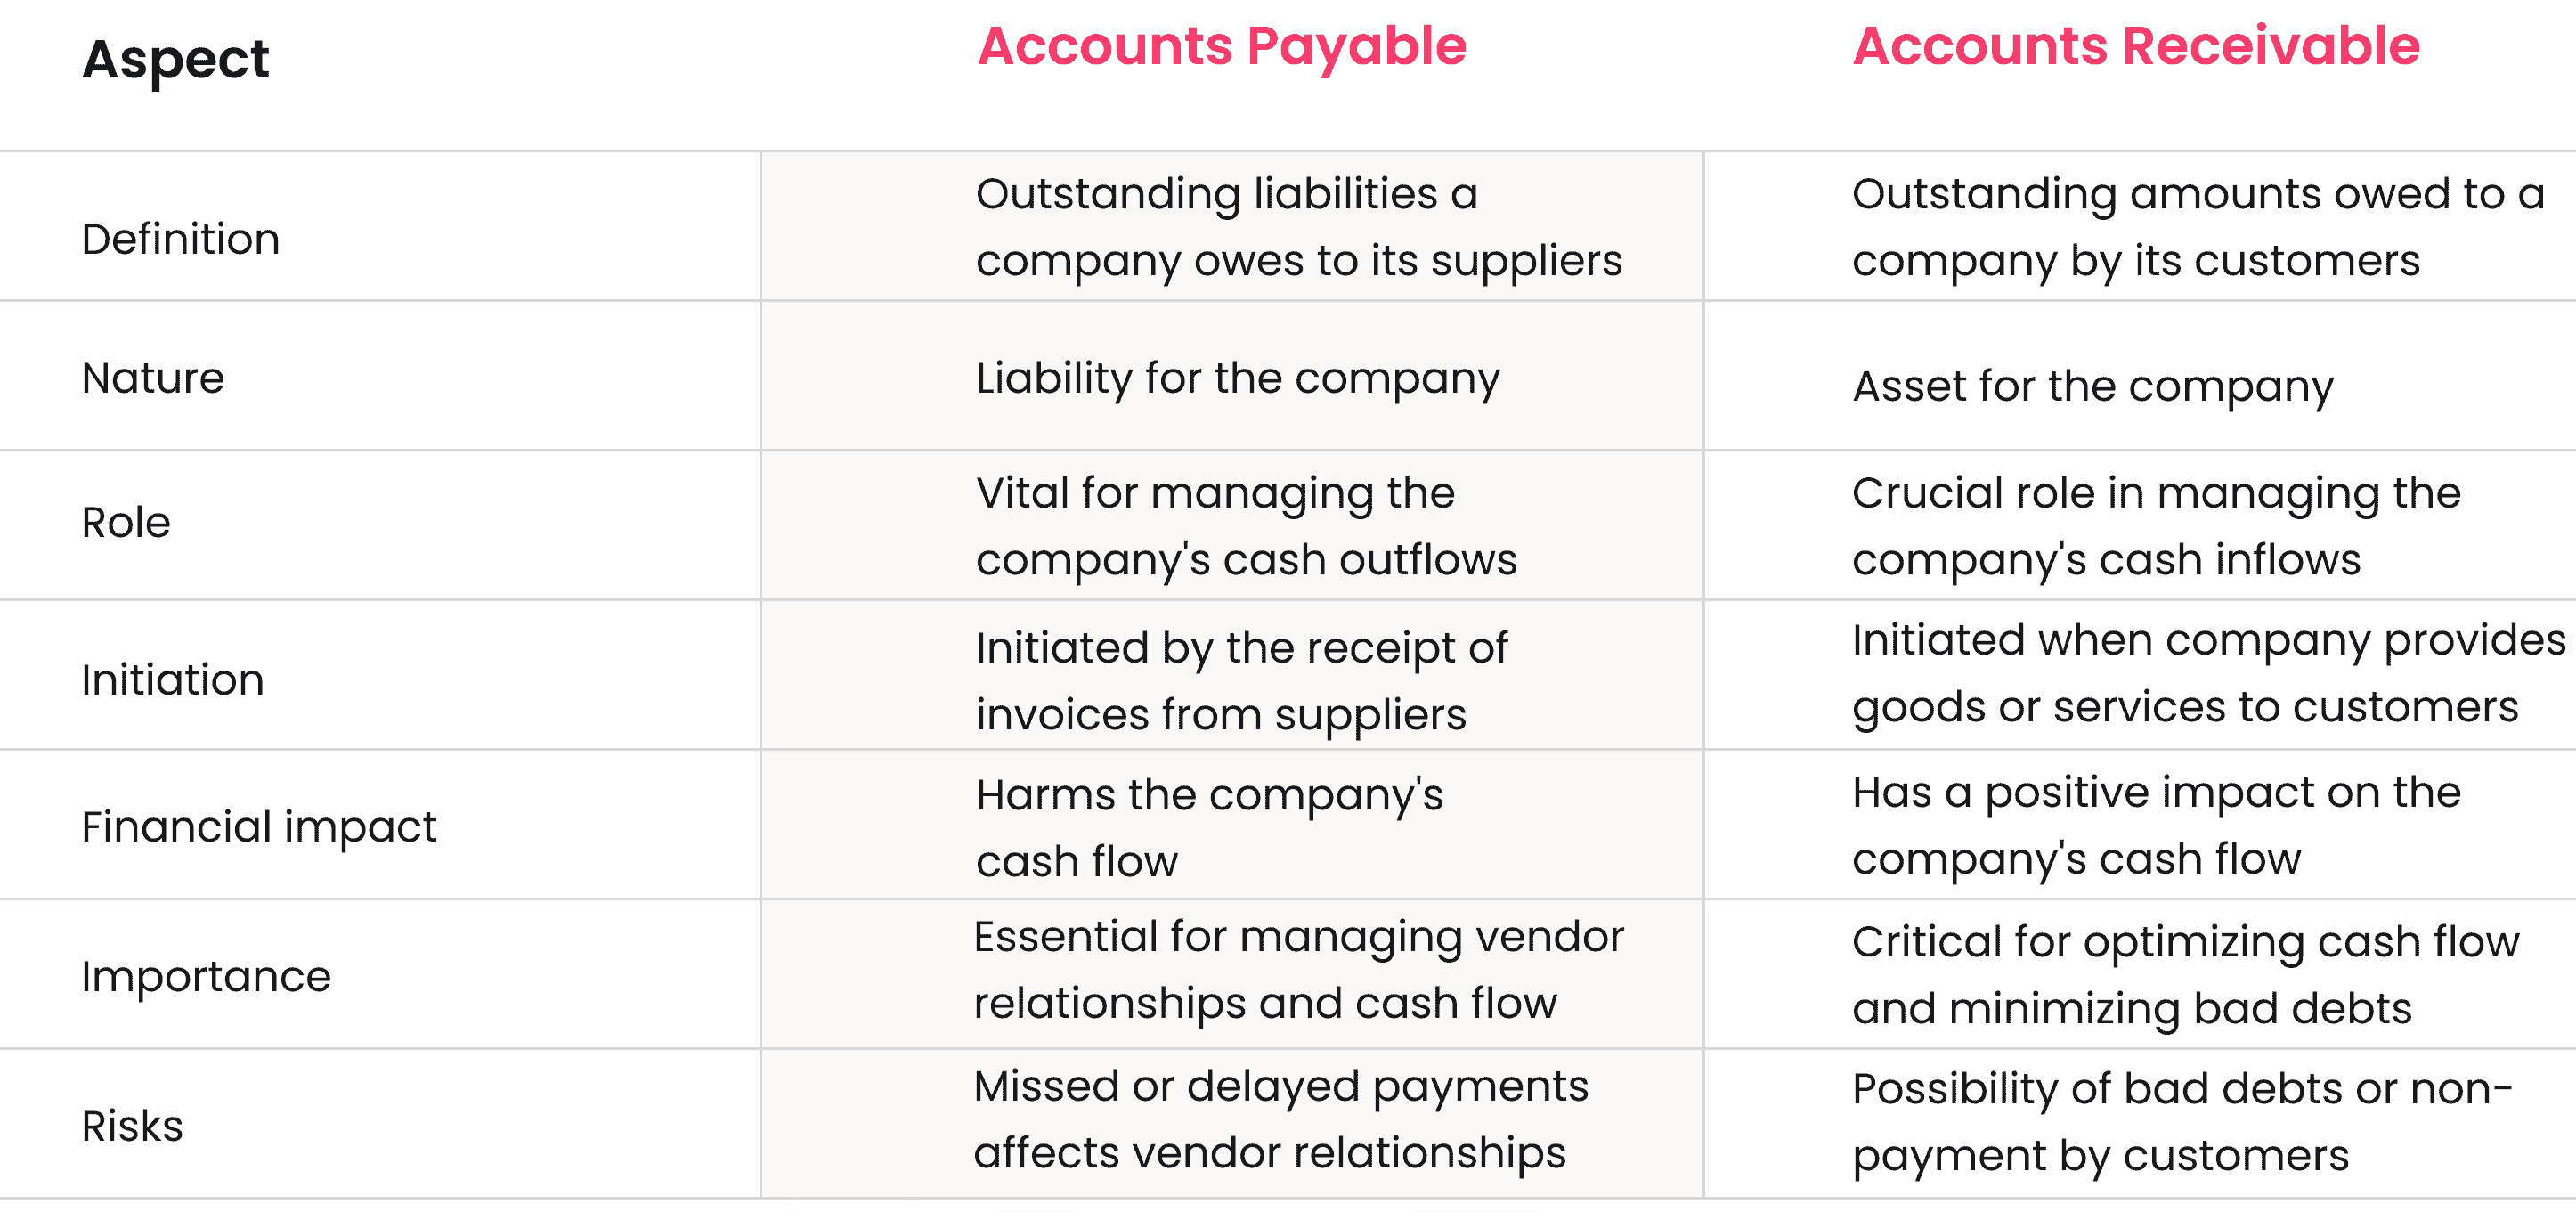 Accounts payable vs Accounts receivable